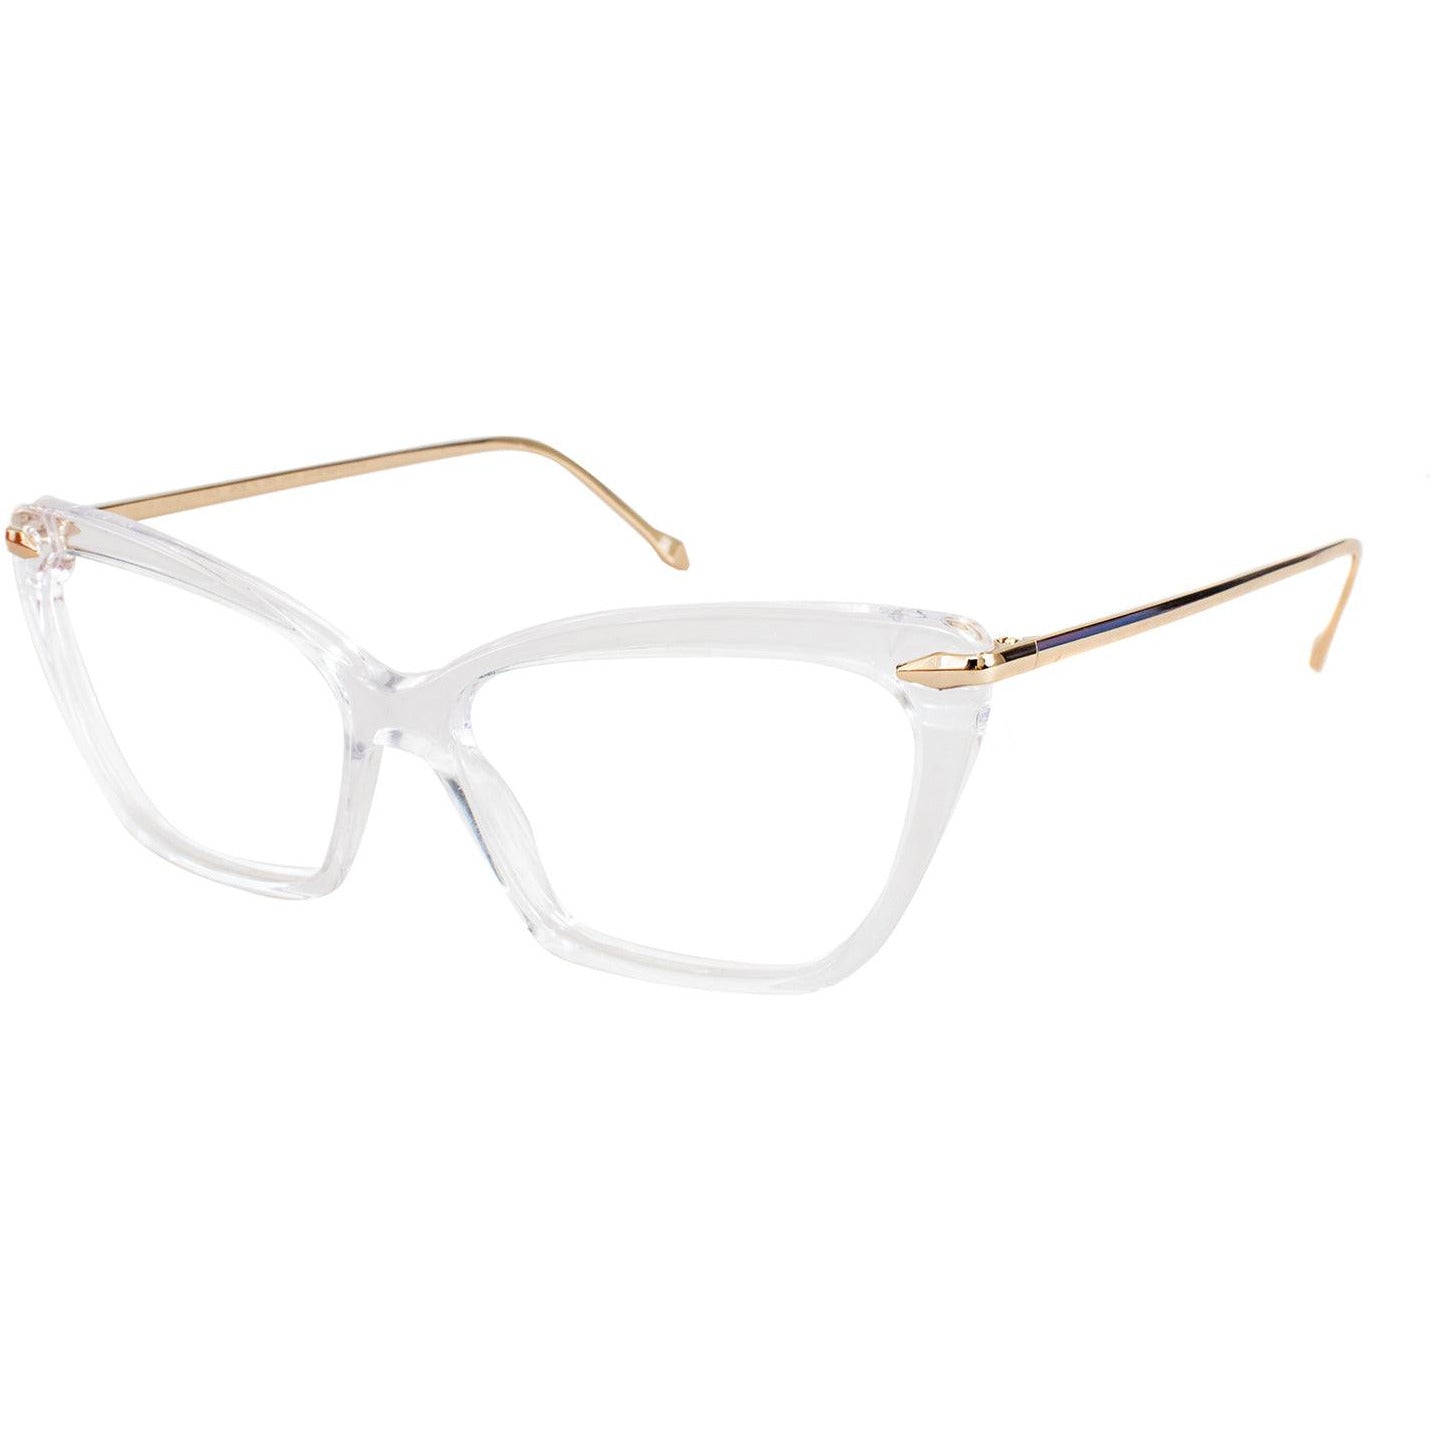 Fashion First: Square Sunglasses, Pin Glasses, Trend/High Sense/Unisex